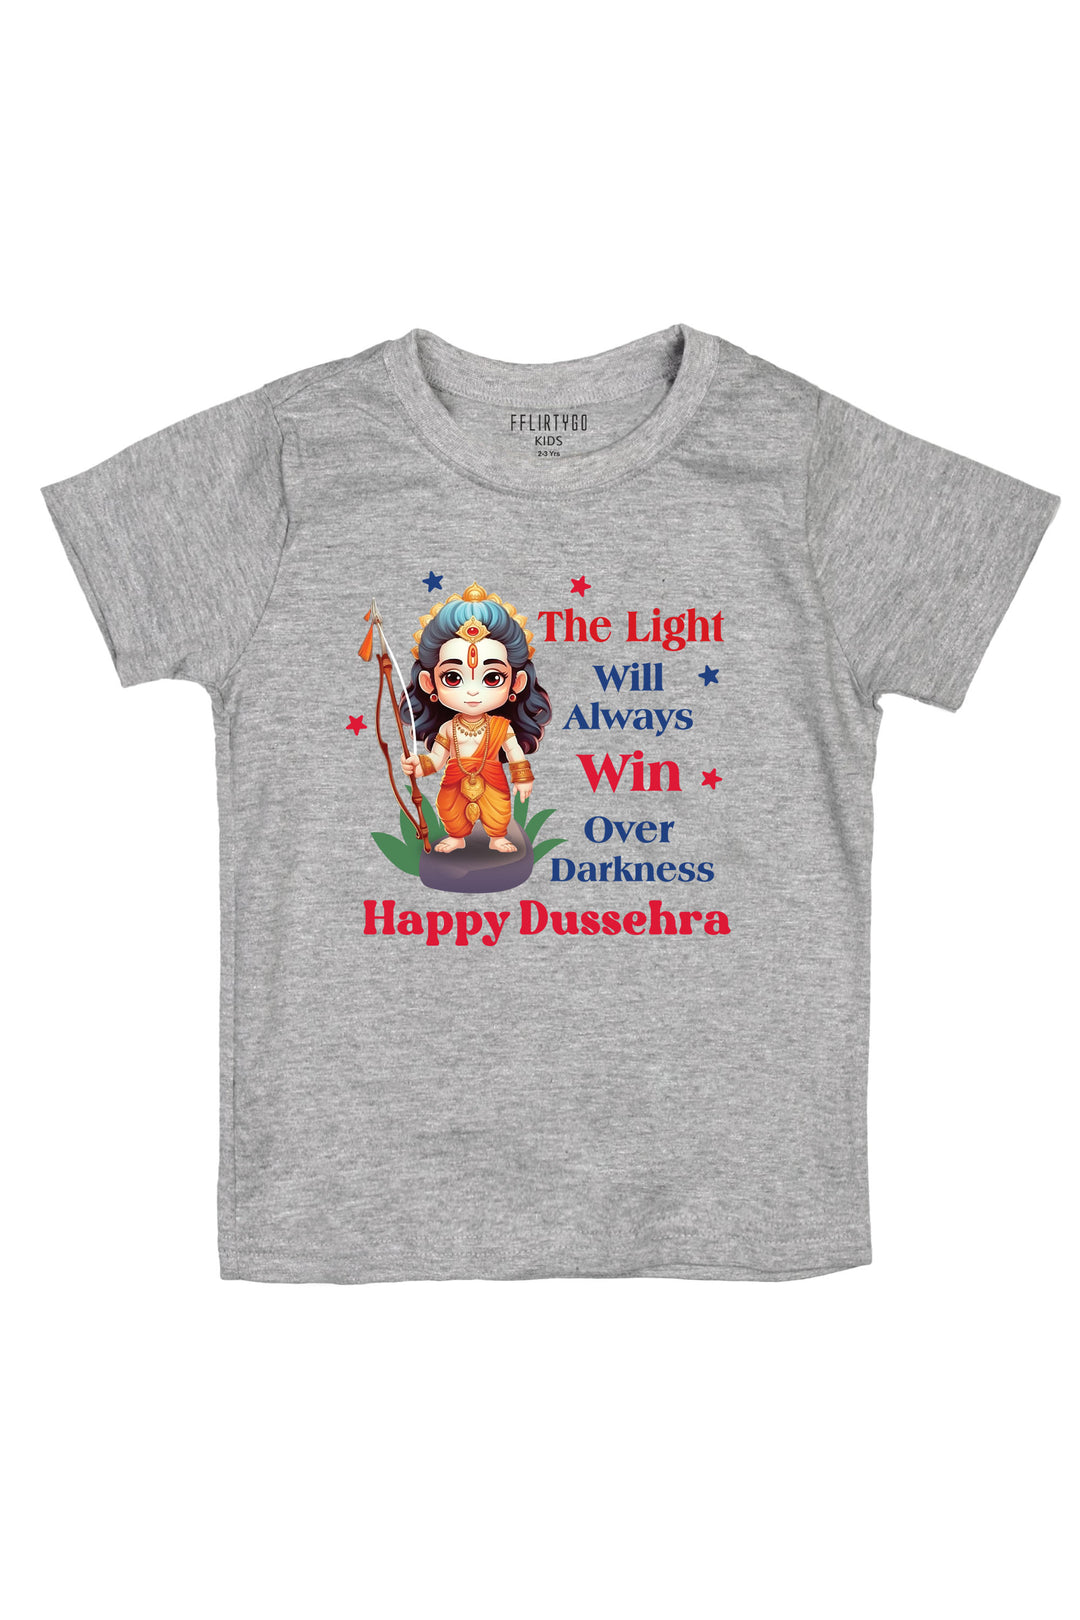 The Light Will Always Win Over Darkness Happy Dussehra Kids T Shirt